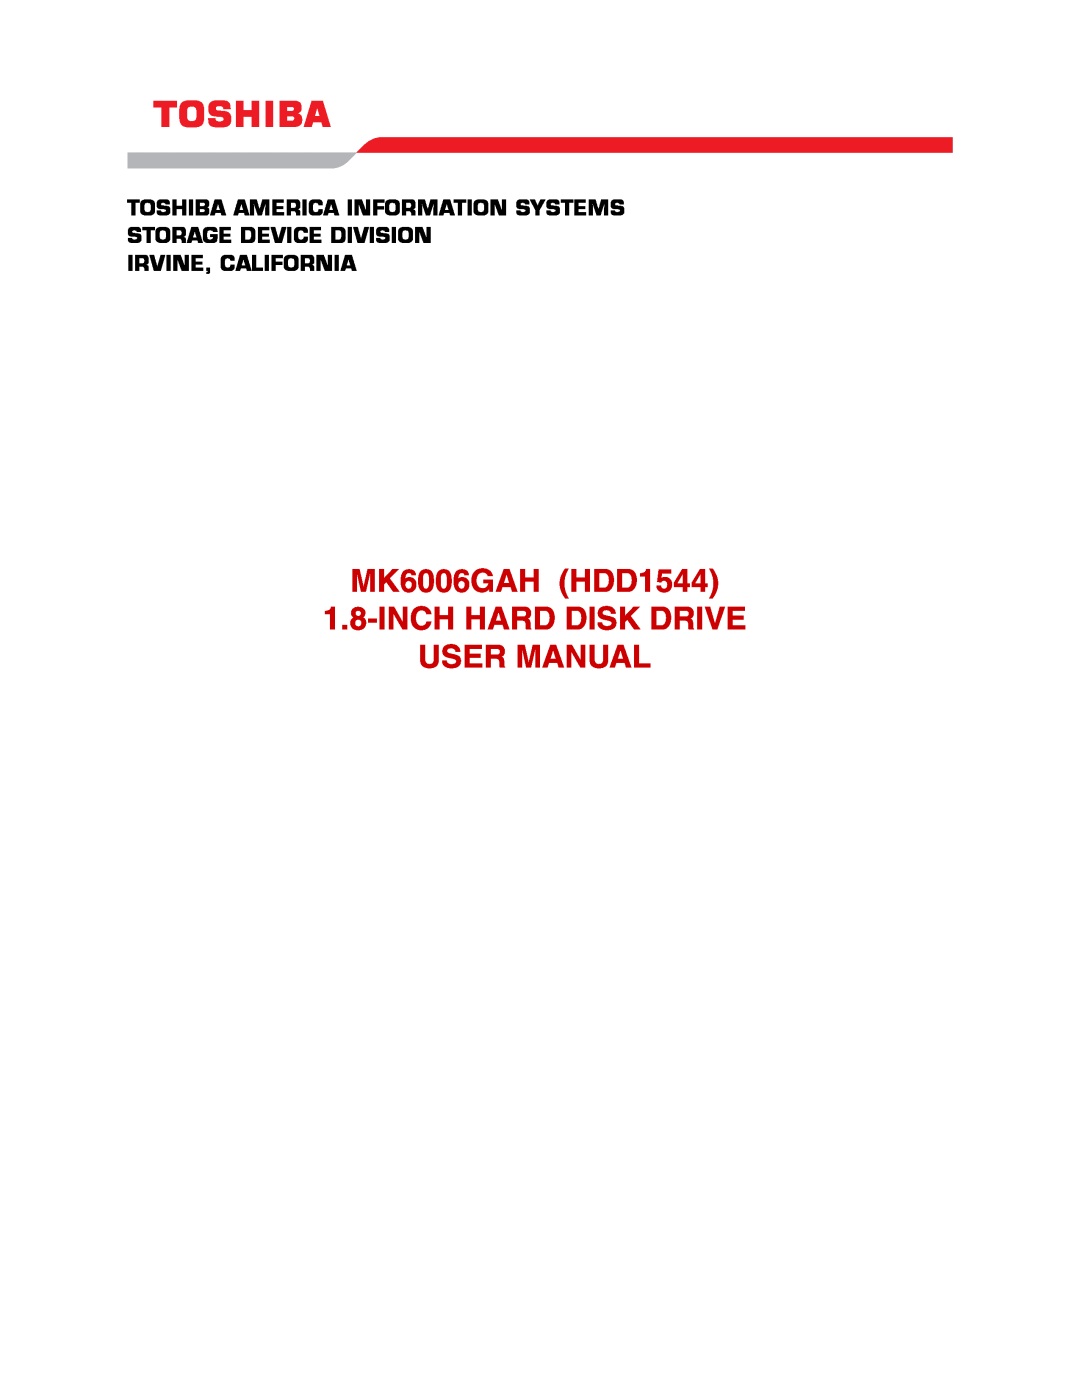 Toshiba HDD1544 user manual Toshiba America Information Systems Storage Device Division, Irvine, California 